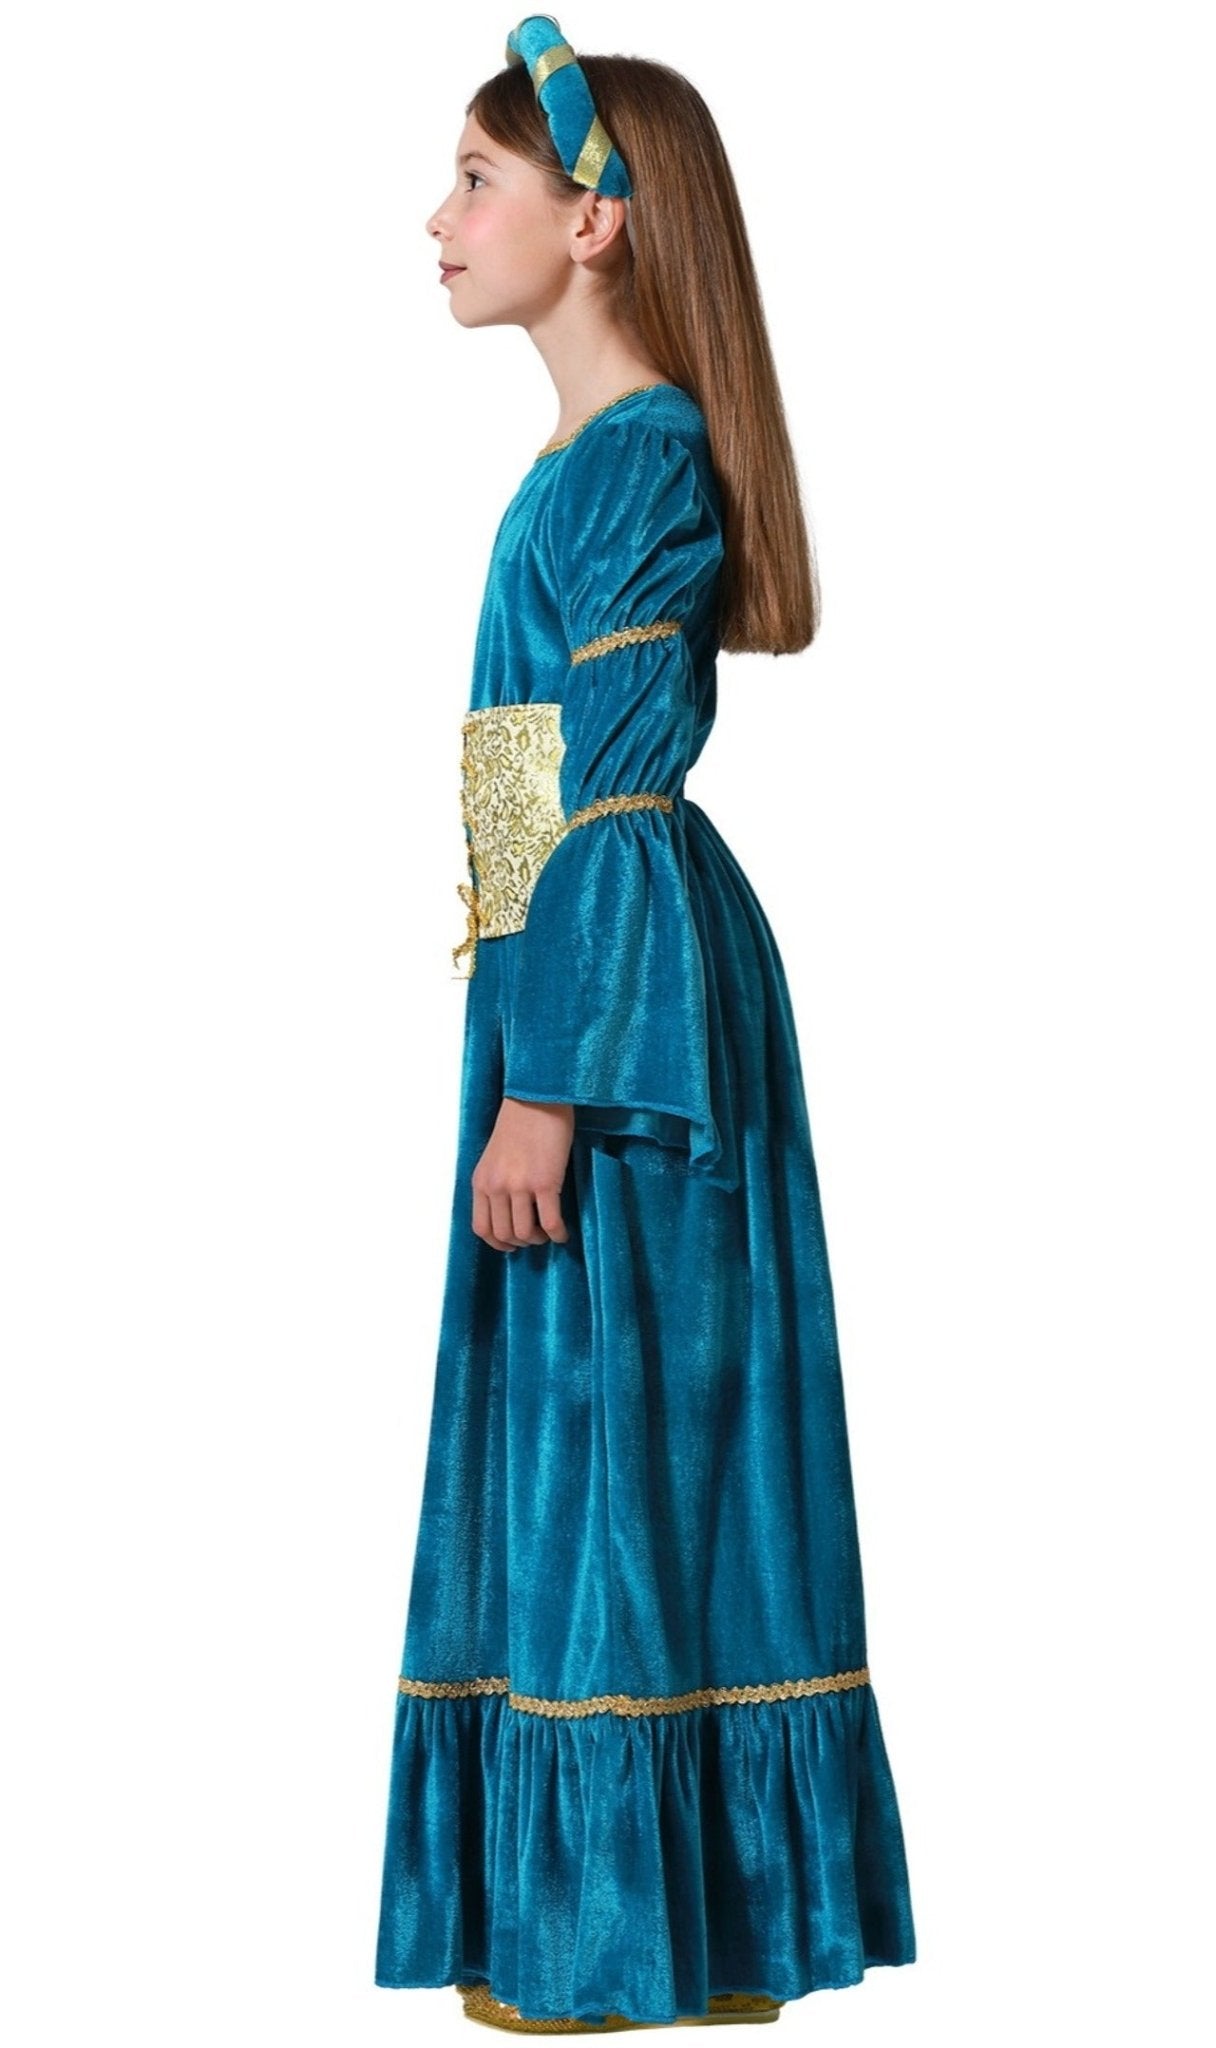 Costume da Principessa Medievale Merida per bambina